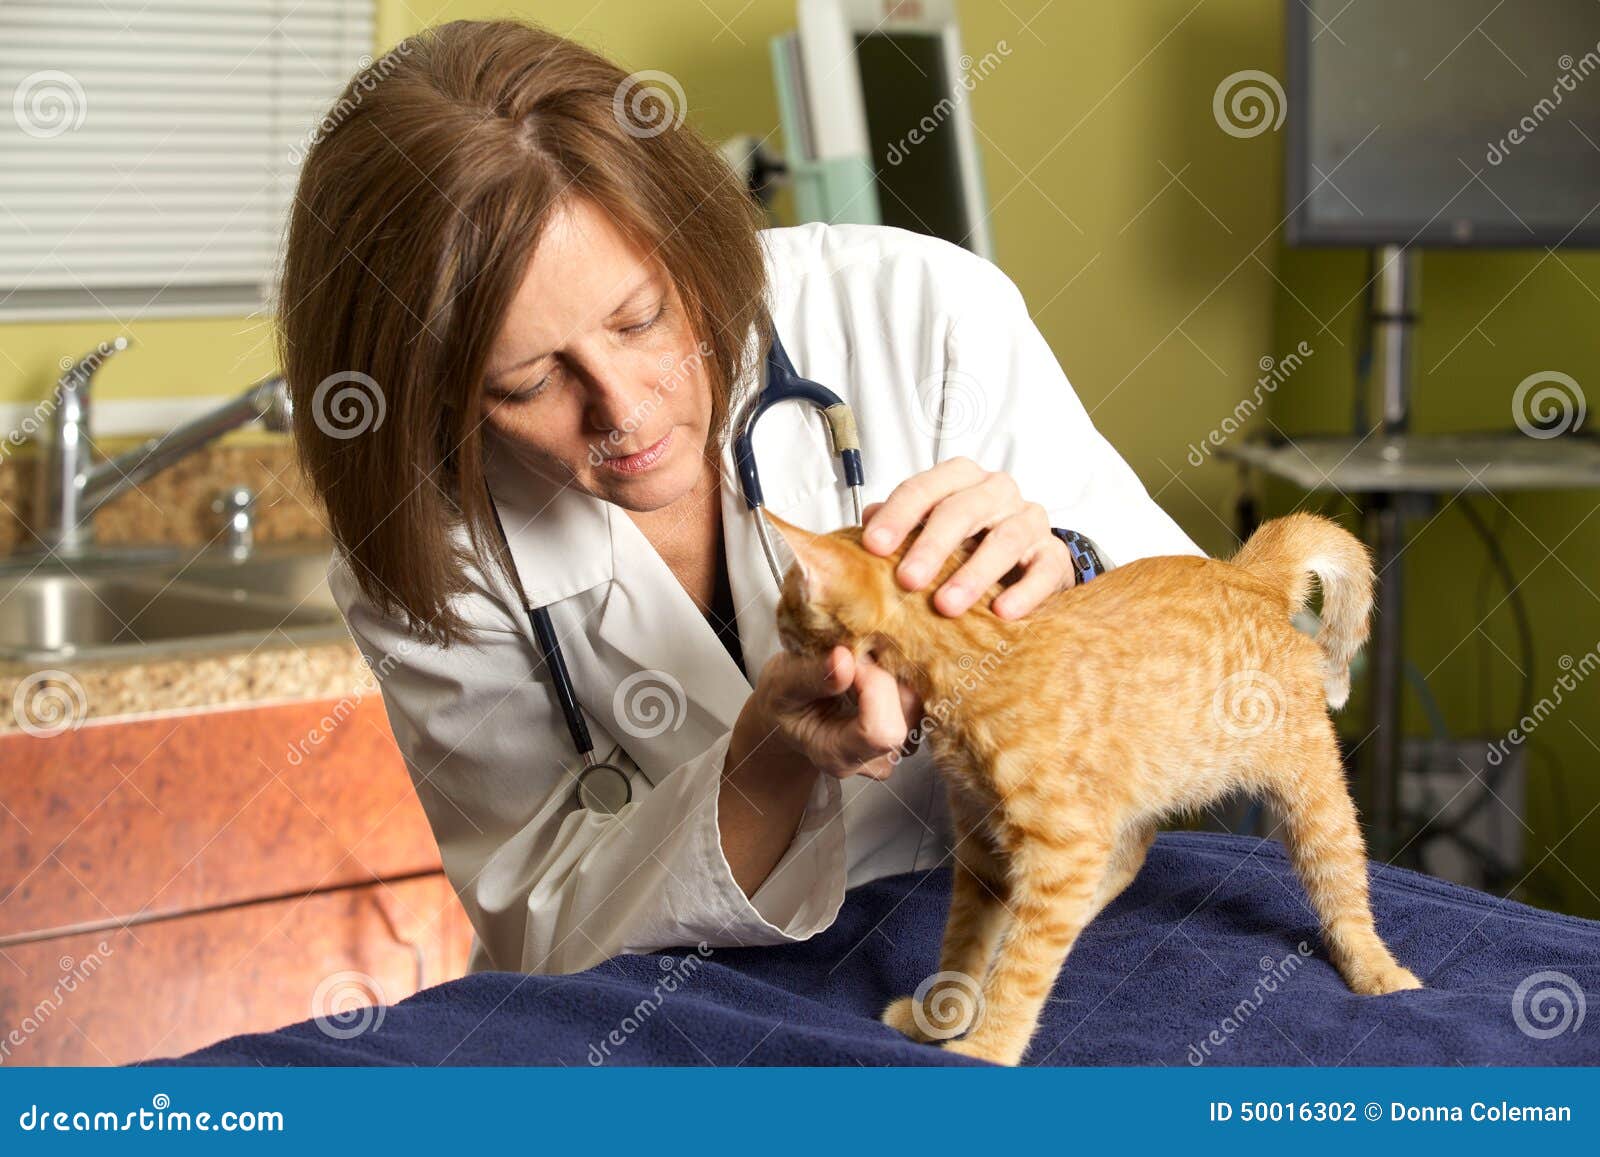 Припадок у кошки. Котик у ветеринара. Кот врач.